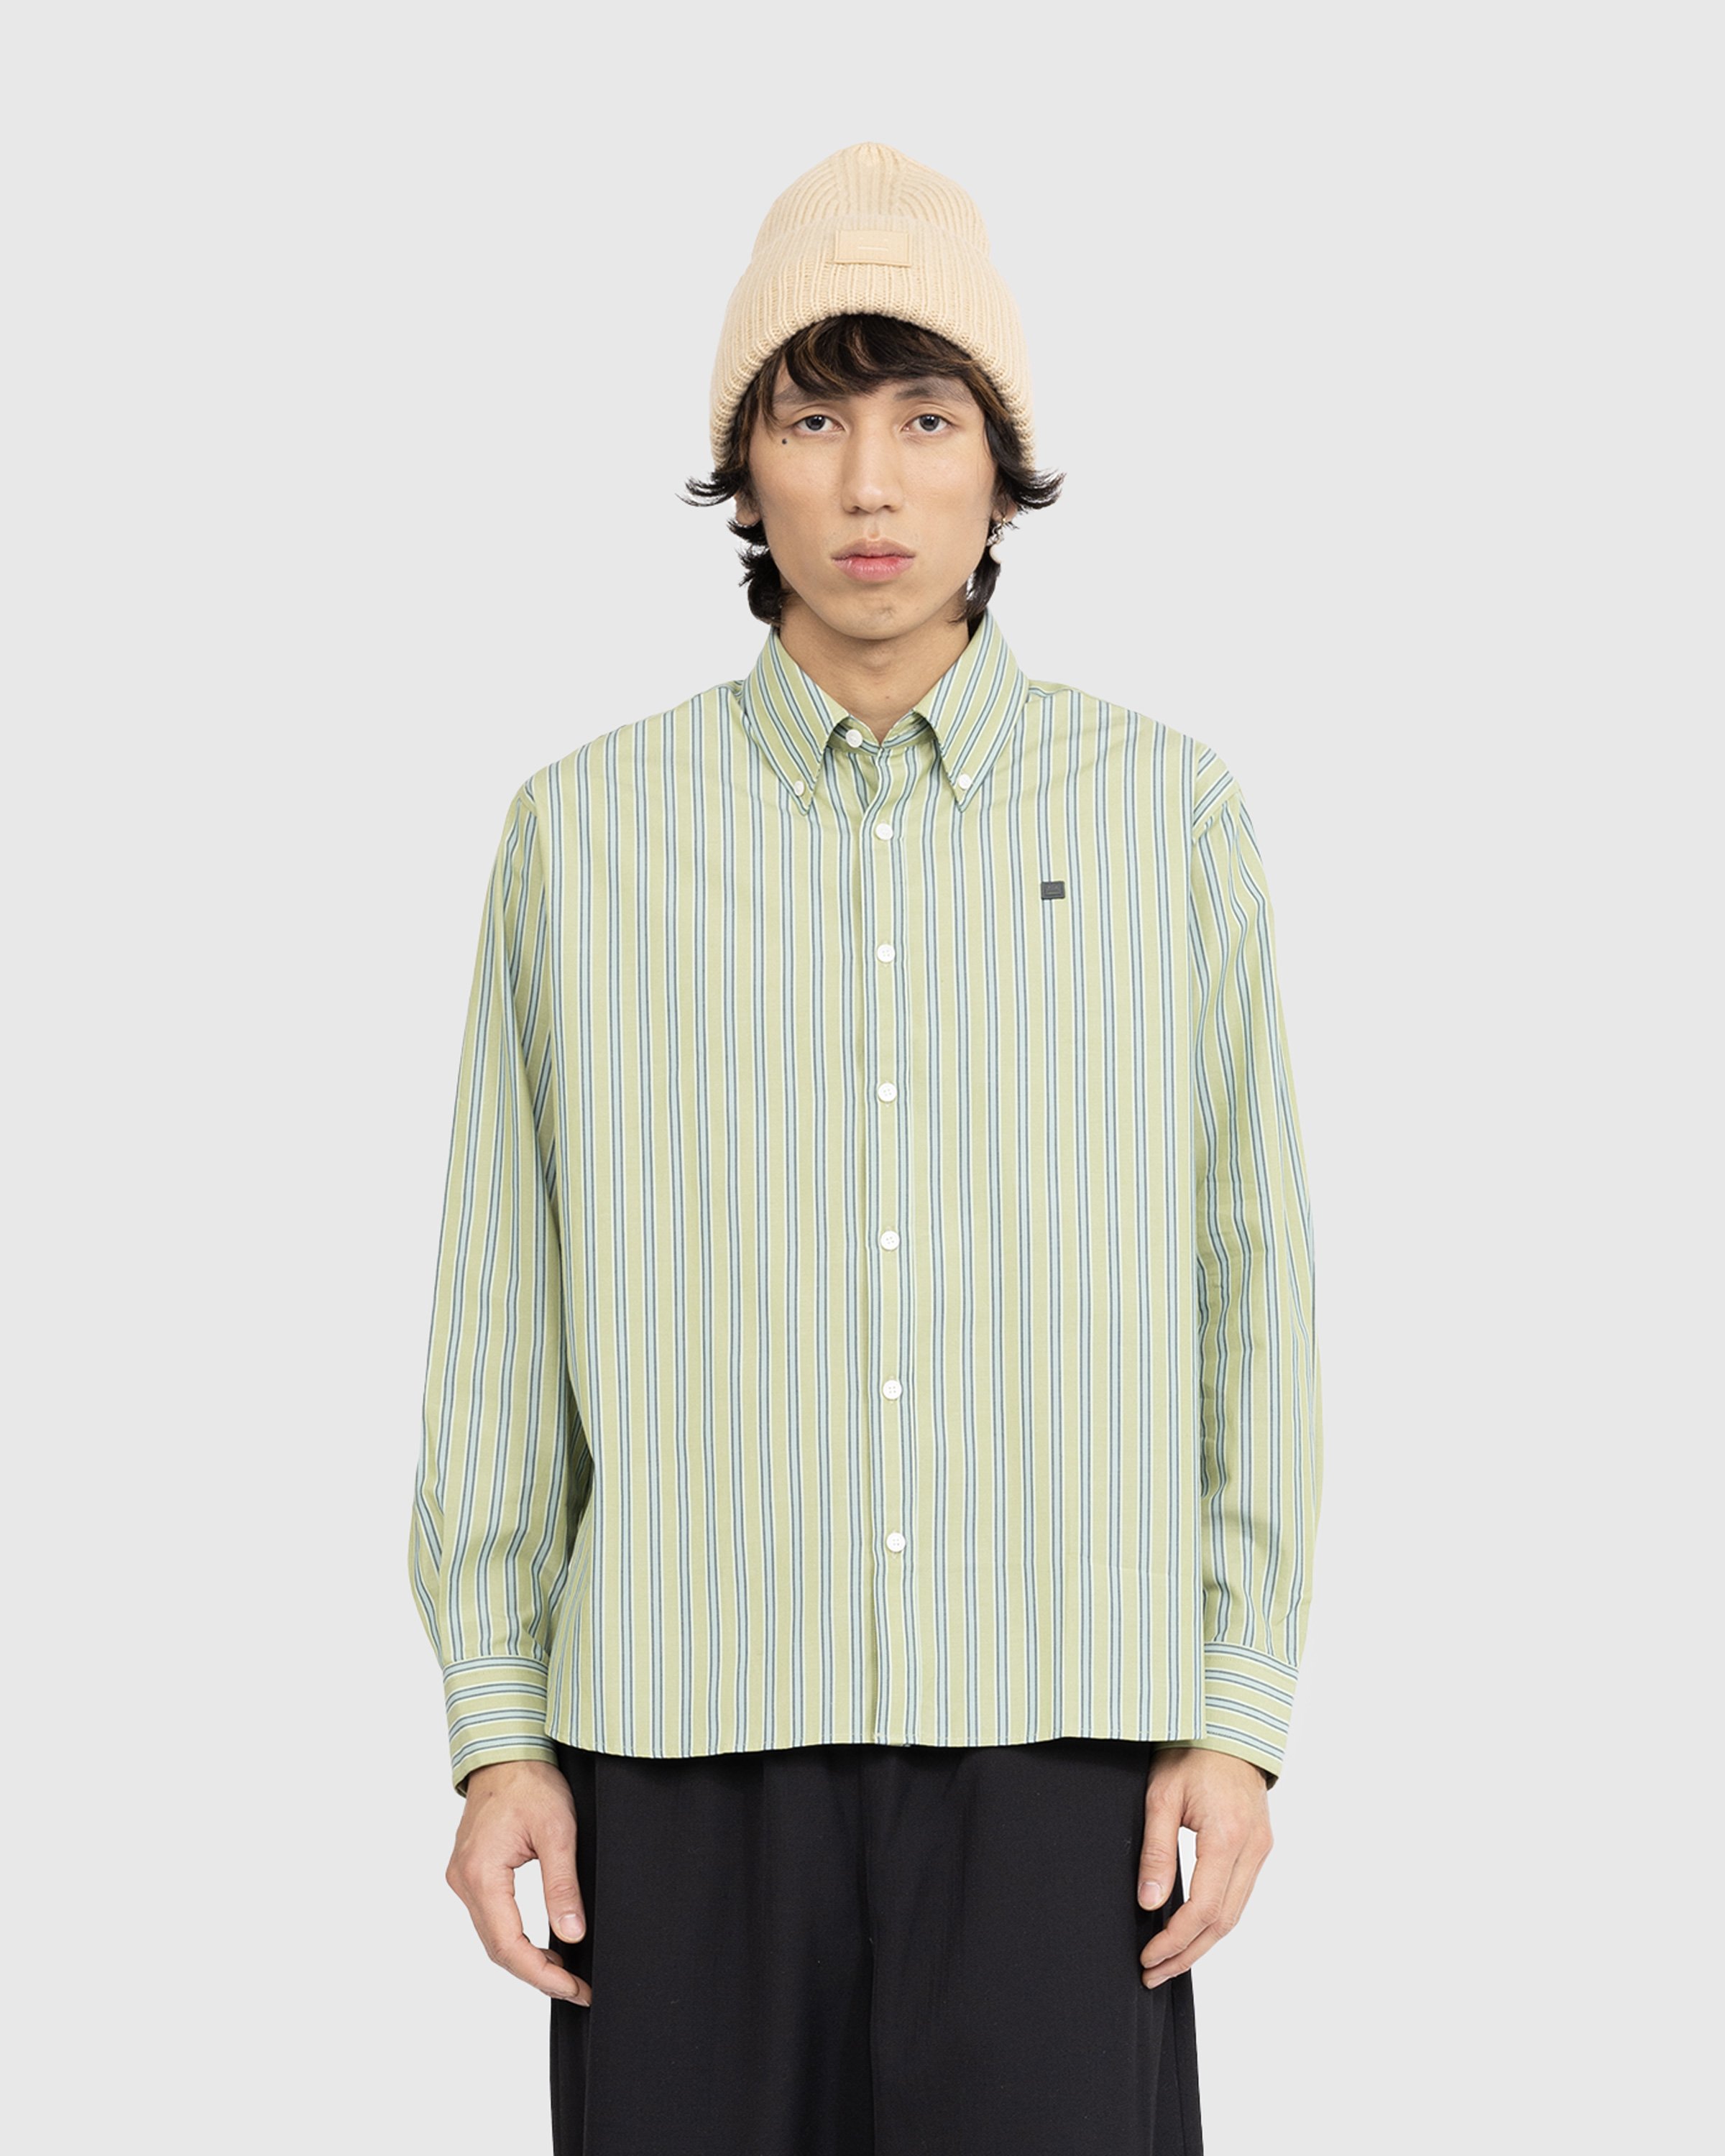 Acne Studios - Stripe Button-Up Shirt Bright Green/Dark Green - Longsleeve Shirts - Green - Image 2